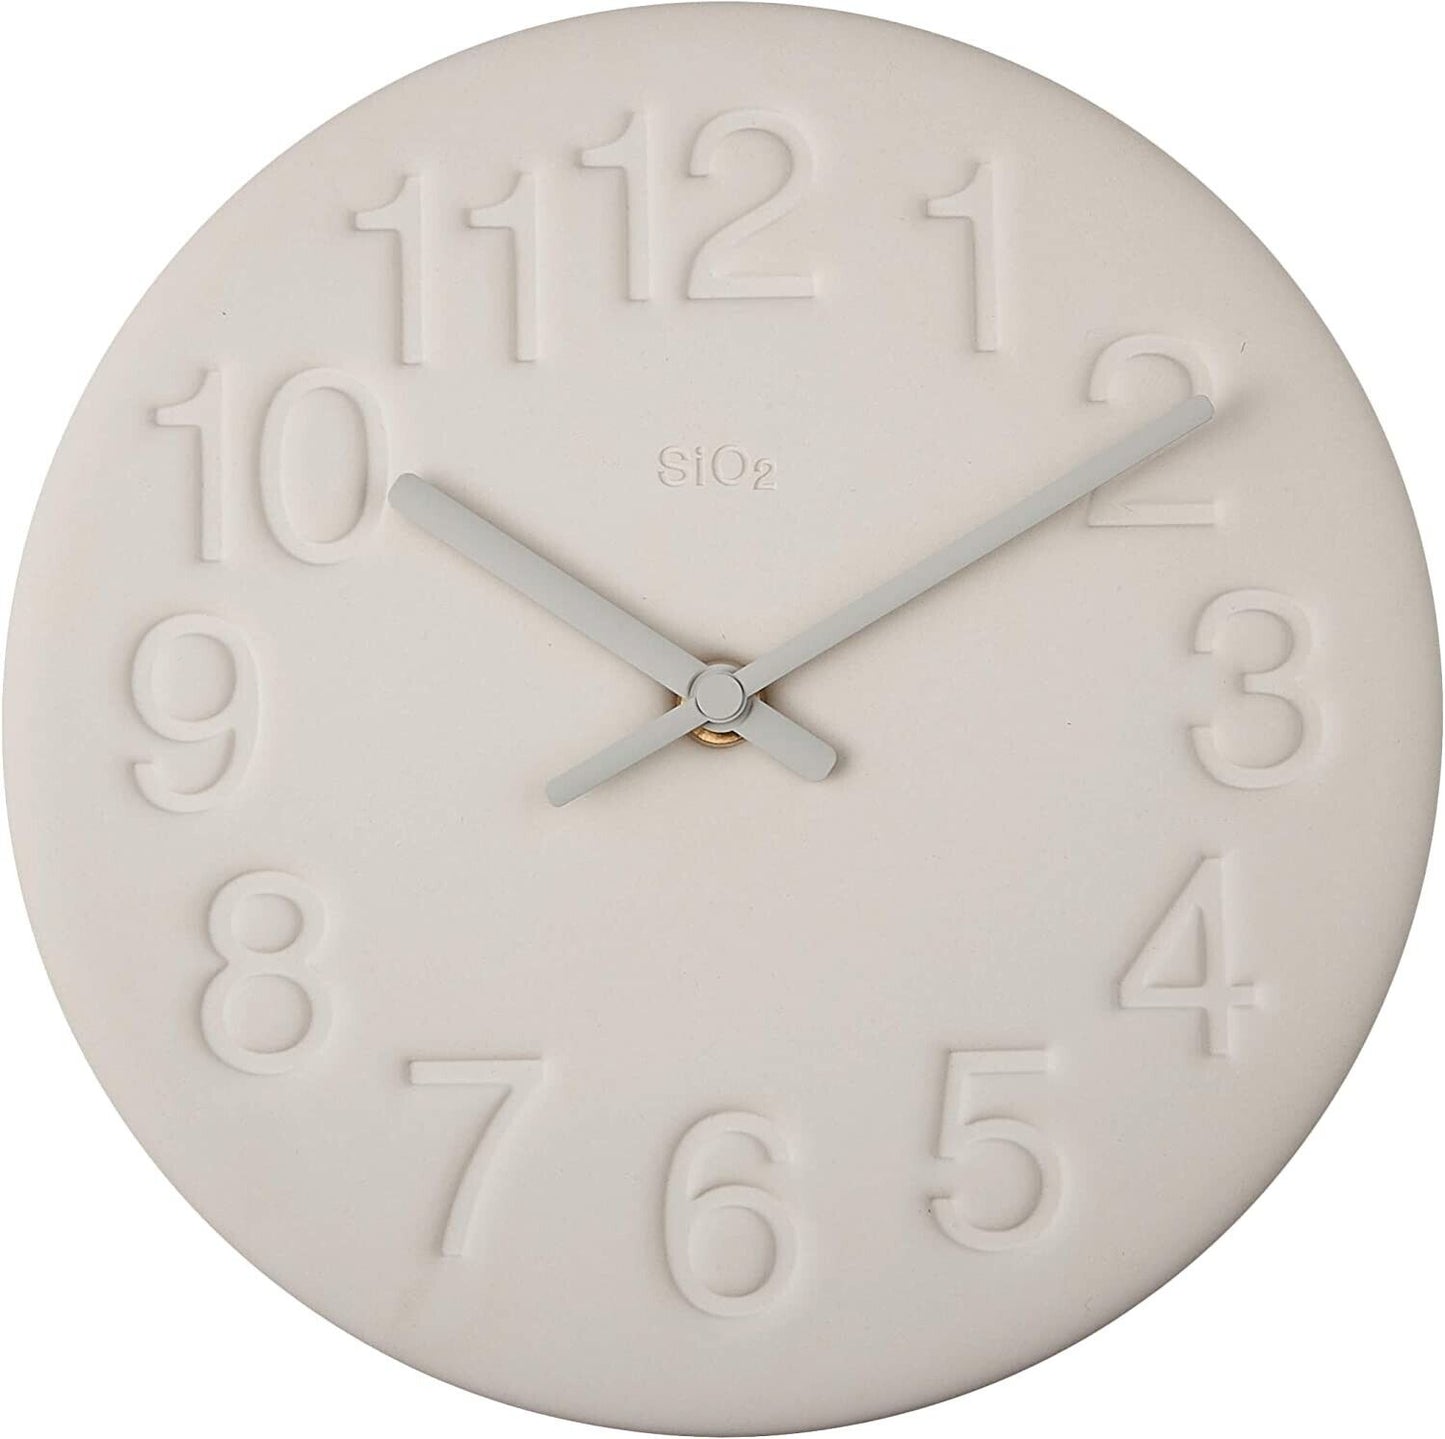 LC11-08 WH Lemnos Wall Clock Analog diatomaceous soil clock white New